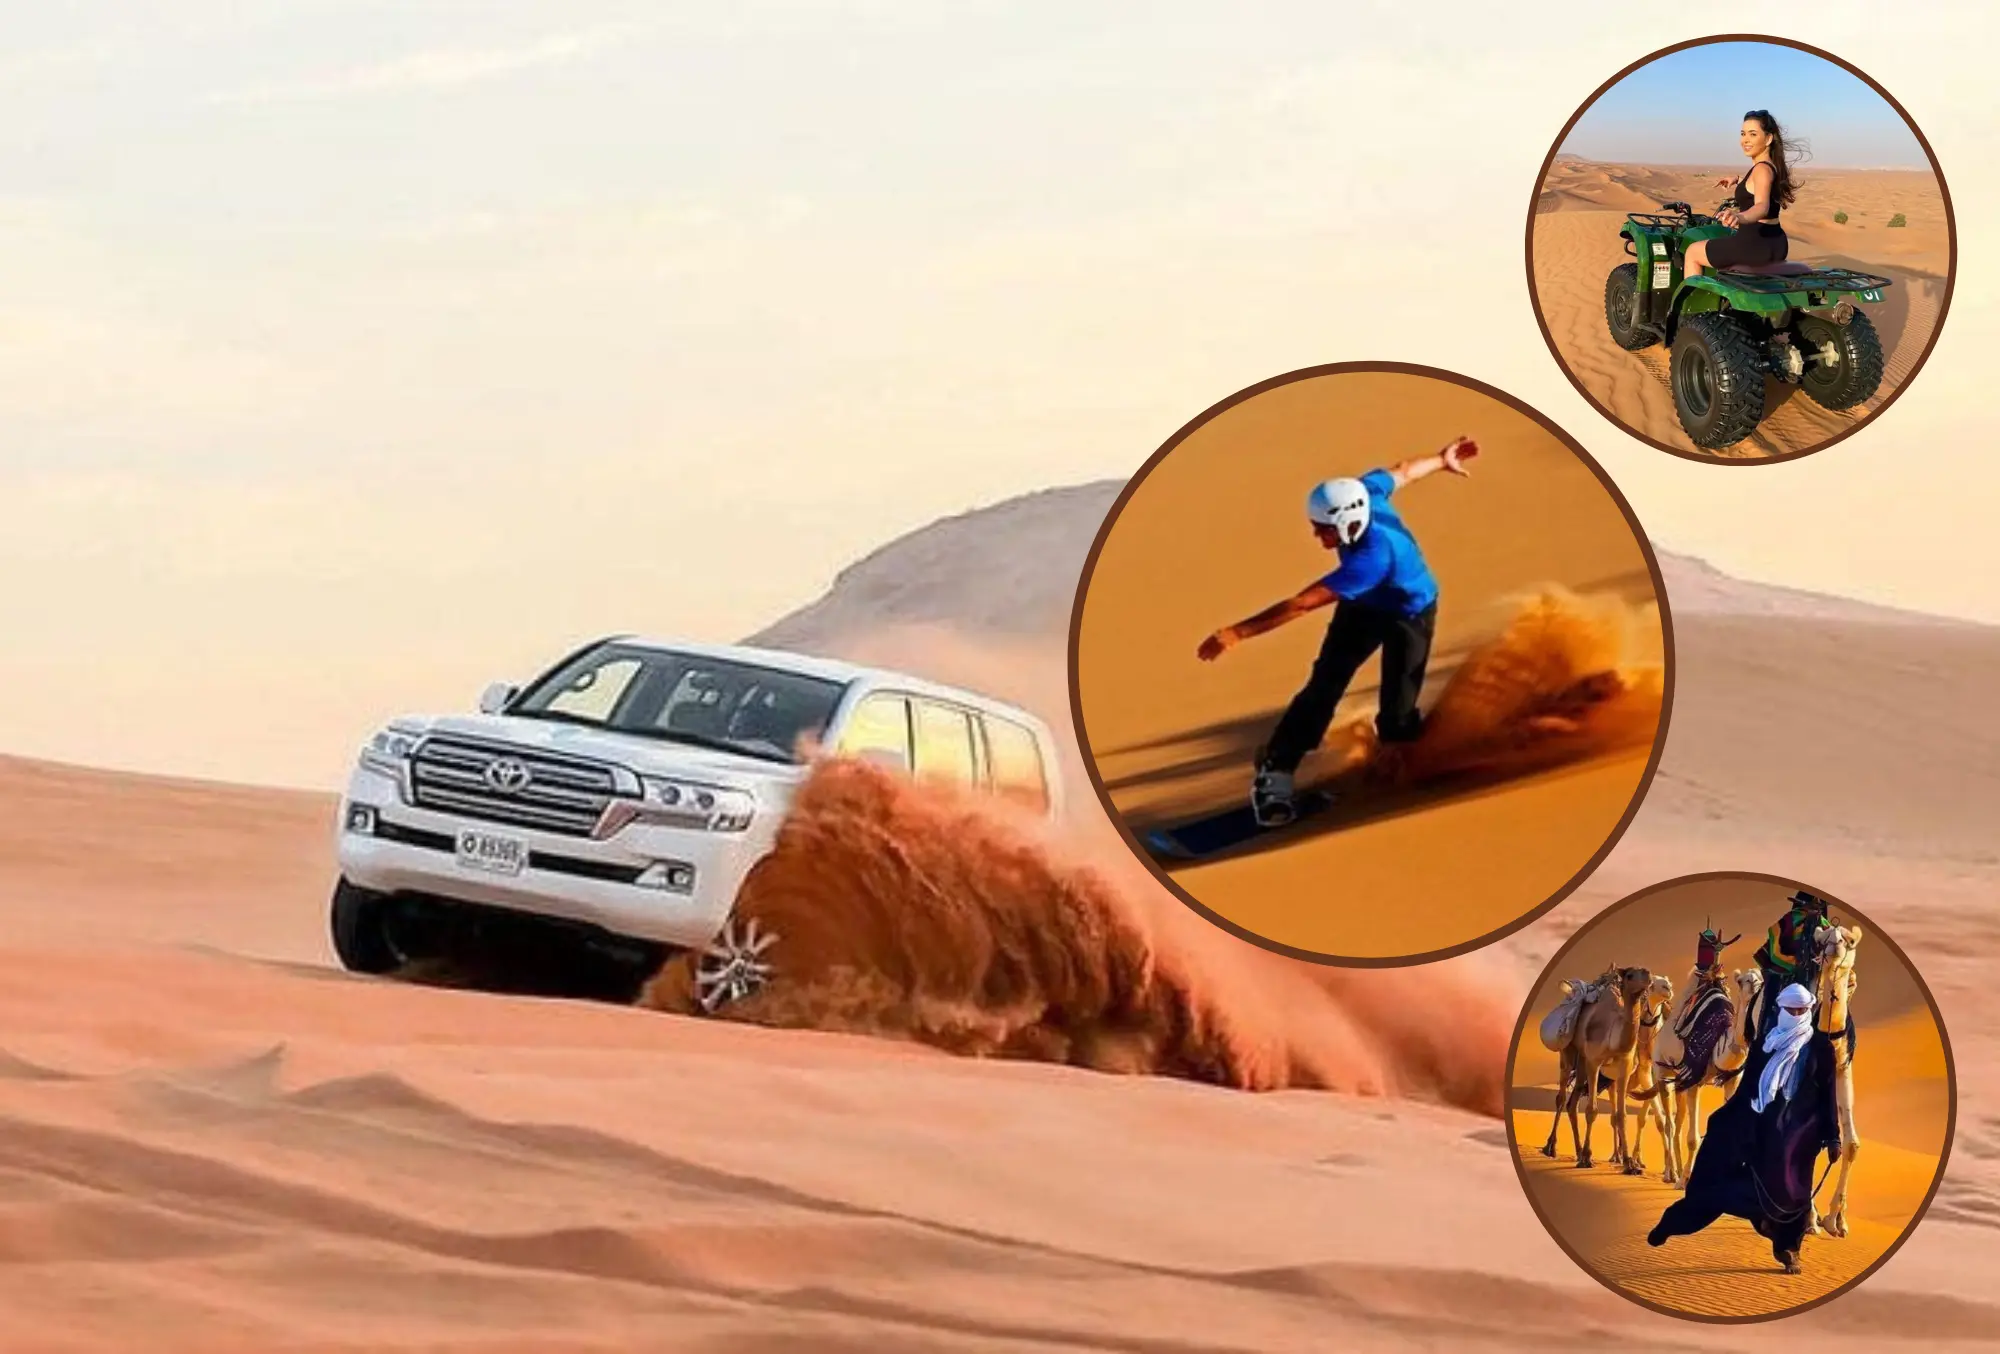 crazy desert safari ride